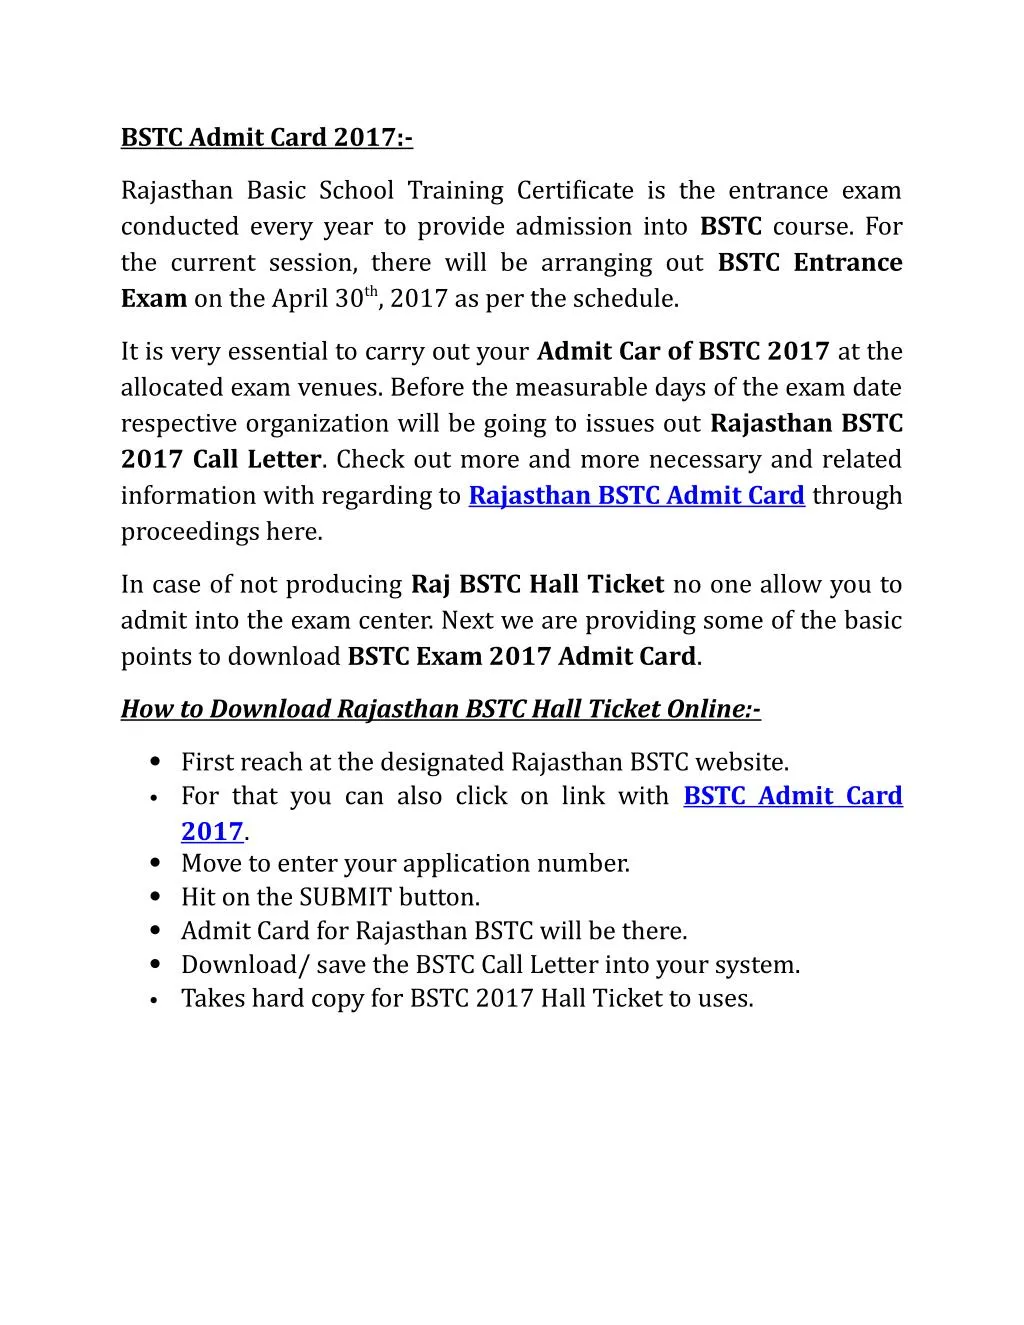 btc admit card download